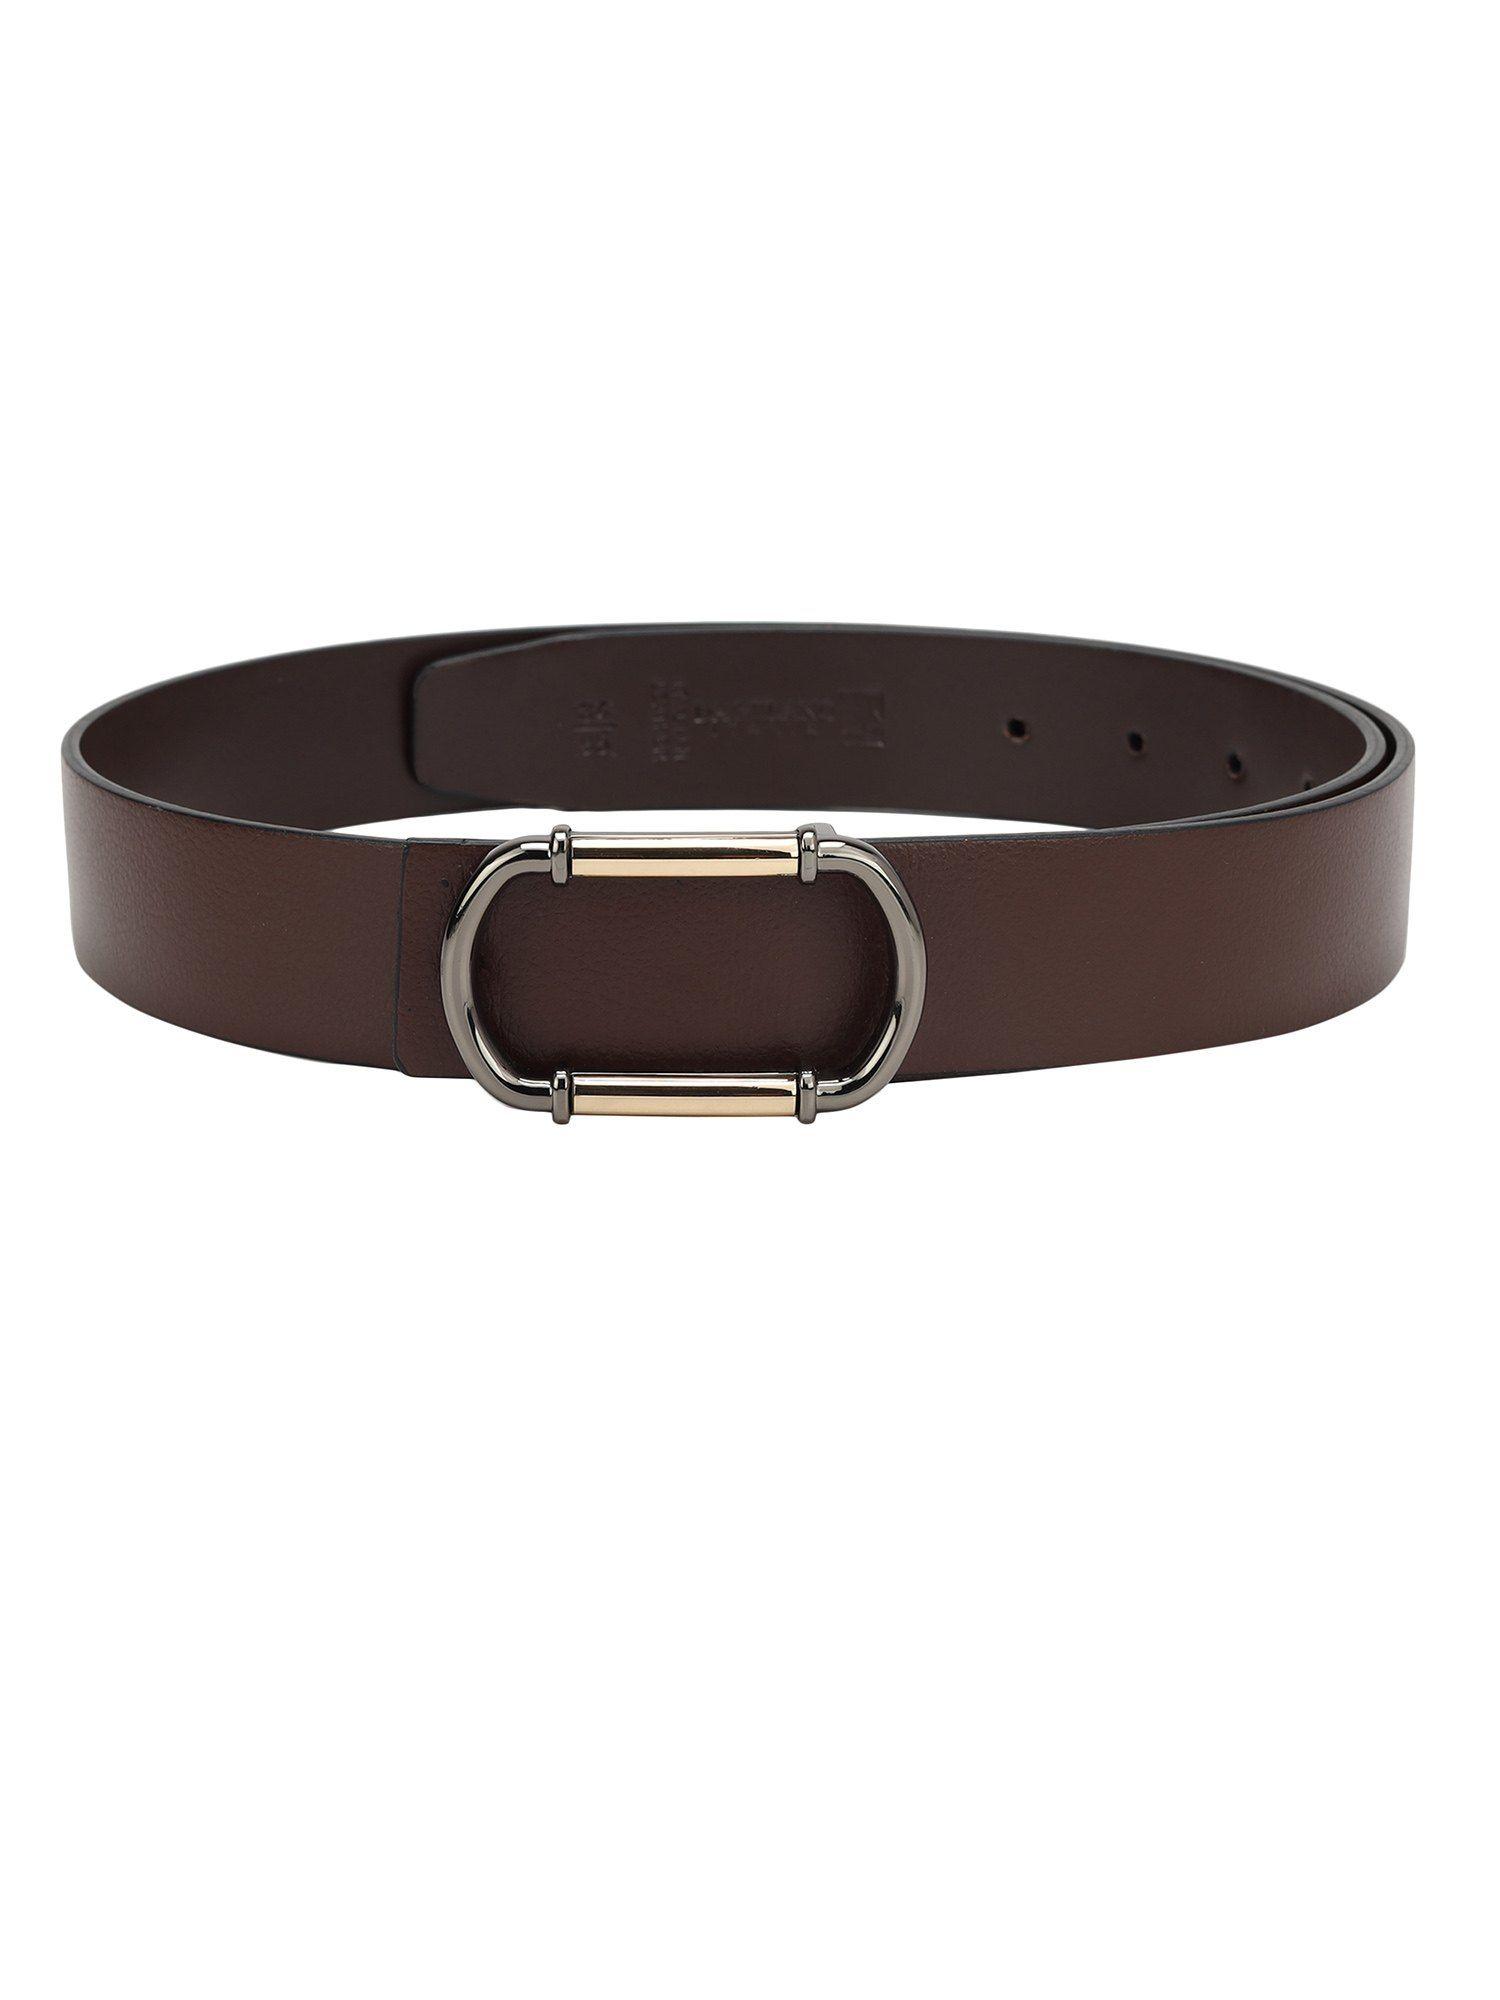 genuine leather brown men's belt